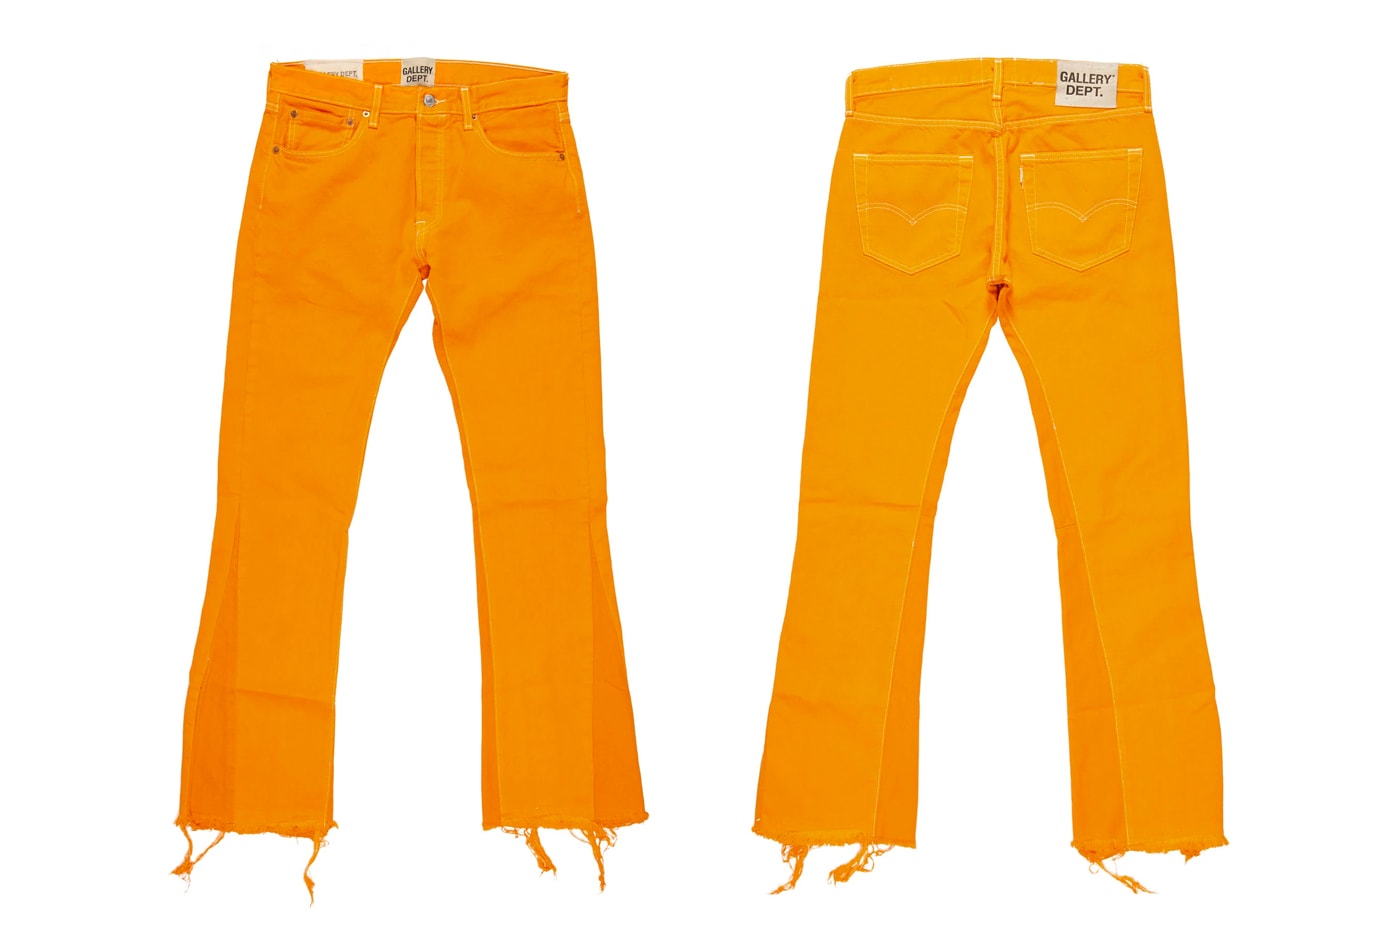 GALLERY DEPT. La Flare Orange Black Denim Release Info Levis 501 Jeans